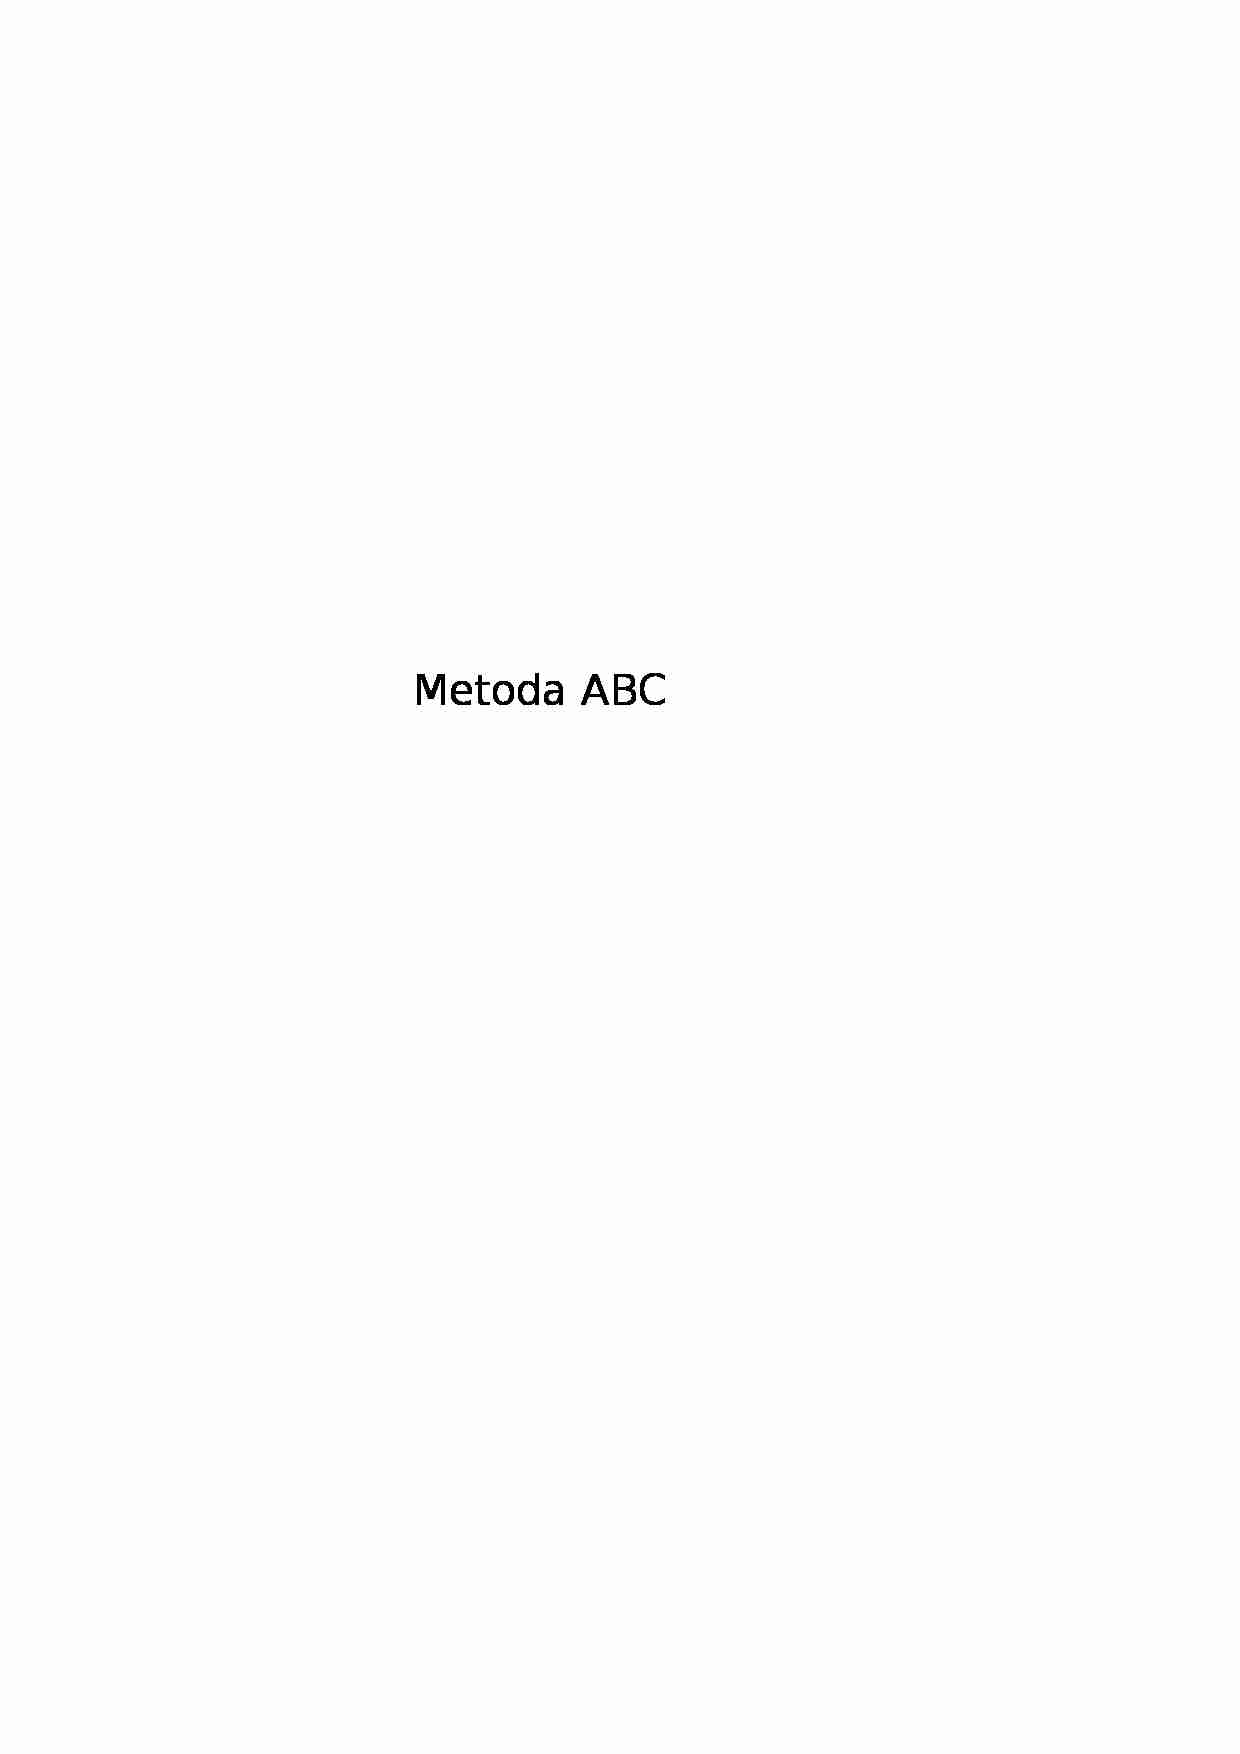 Metoda ABC i zasada Pareto - strona 1